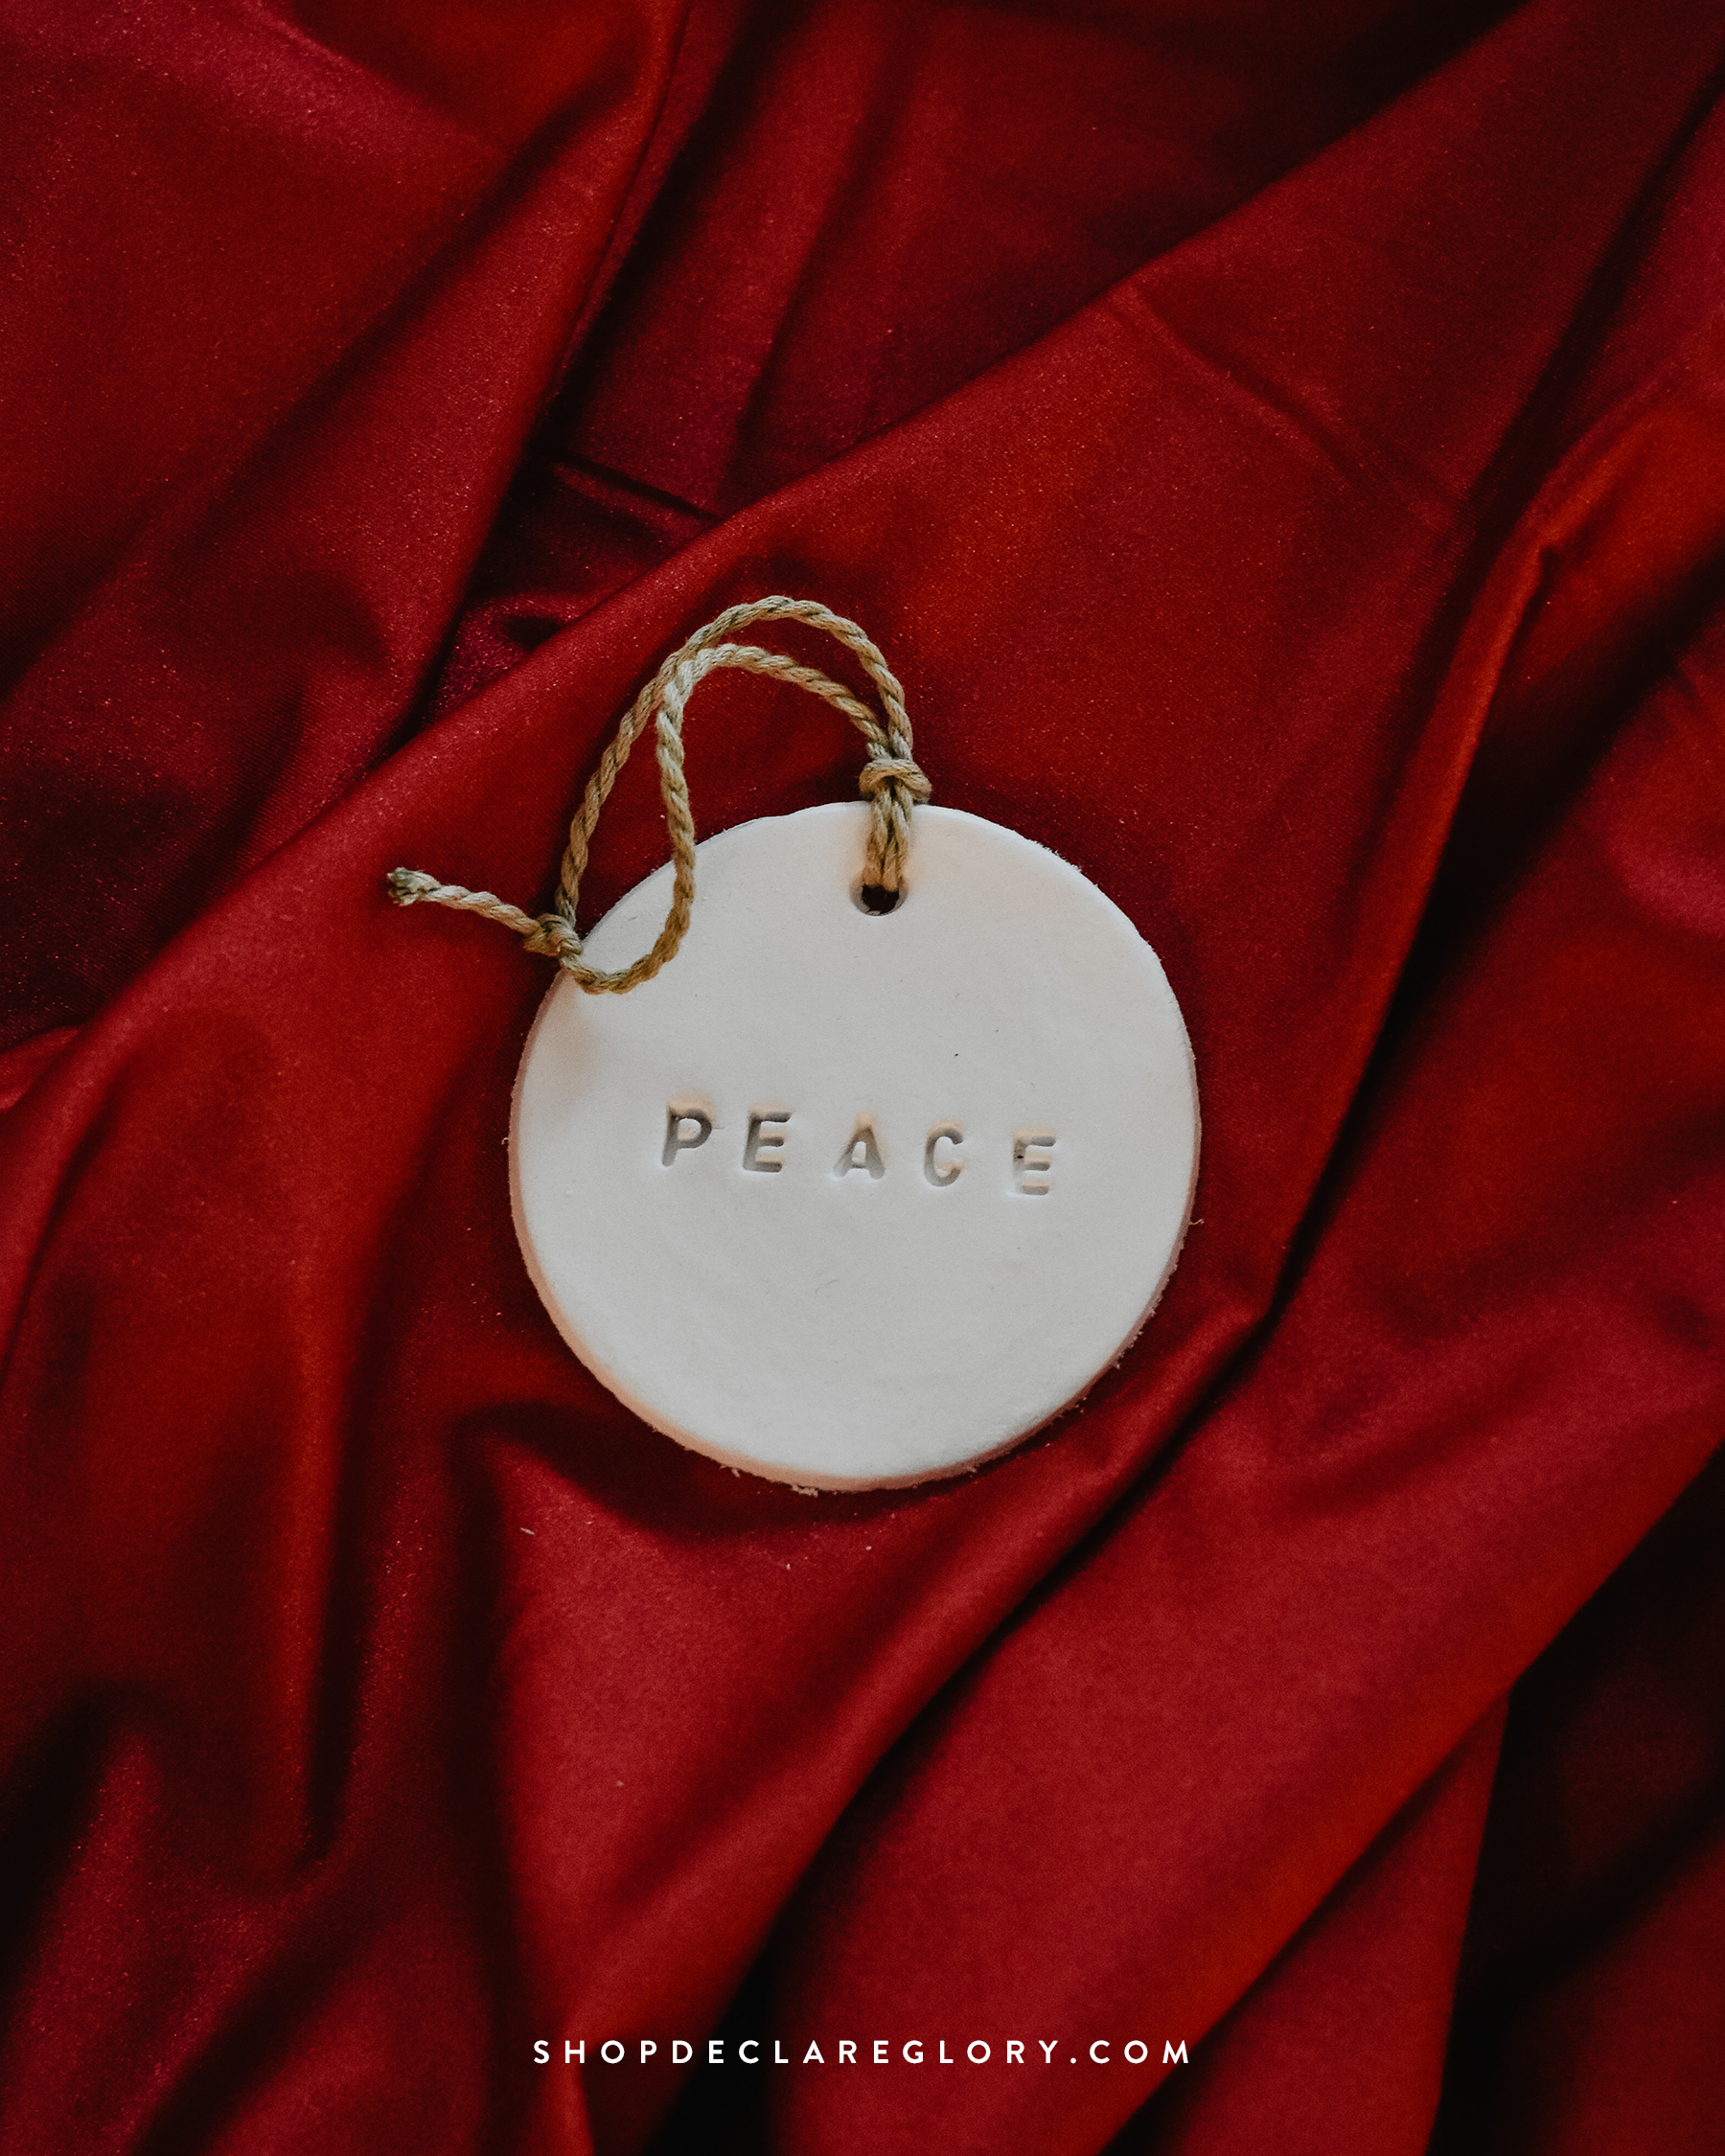 "PEACE" Ornament